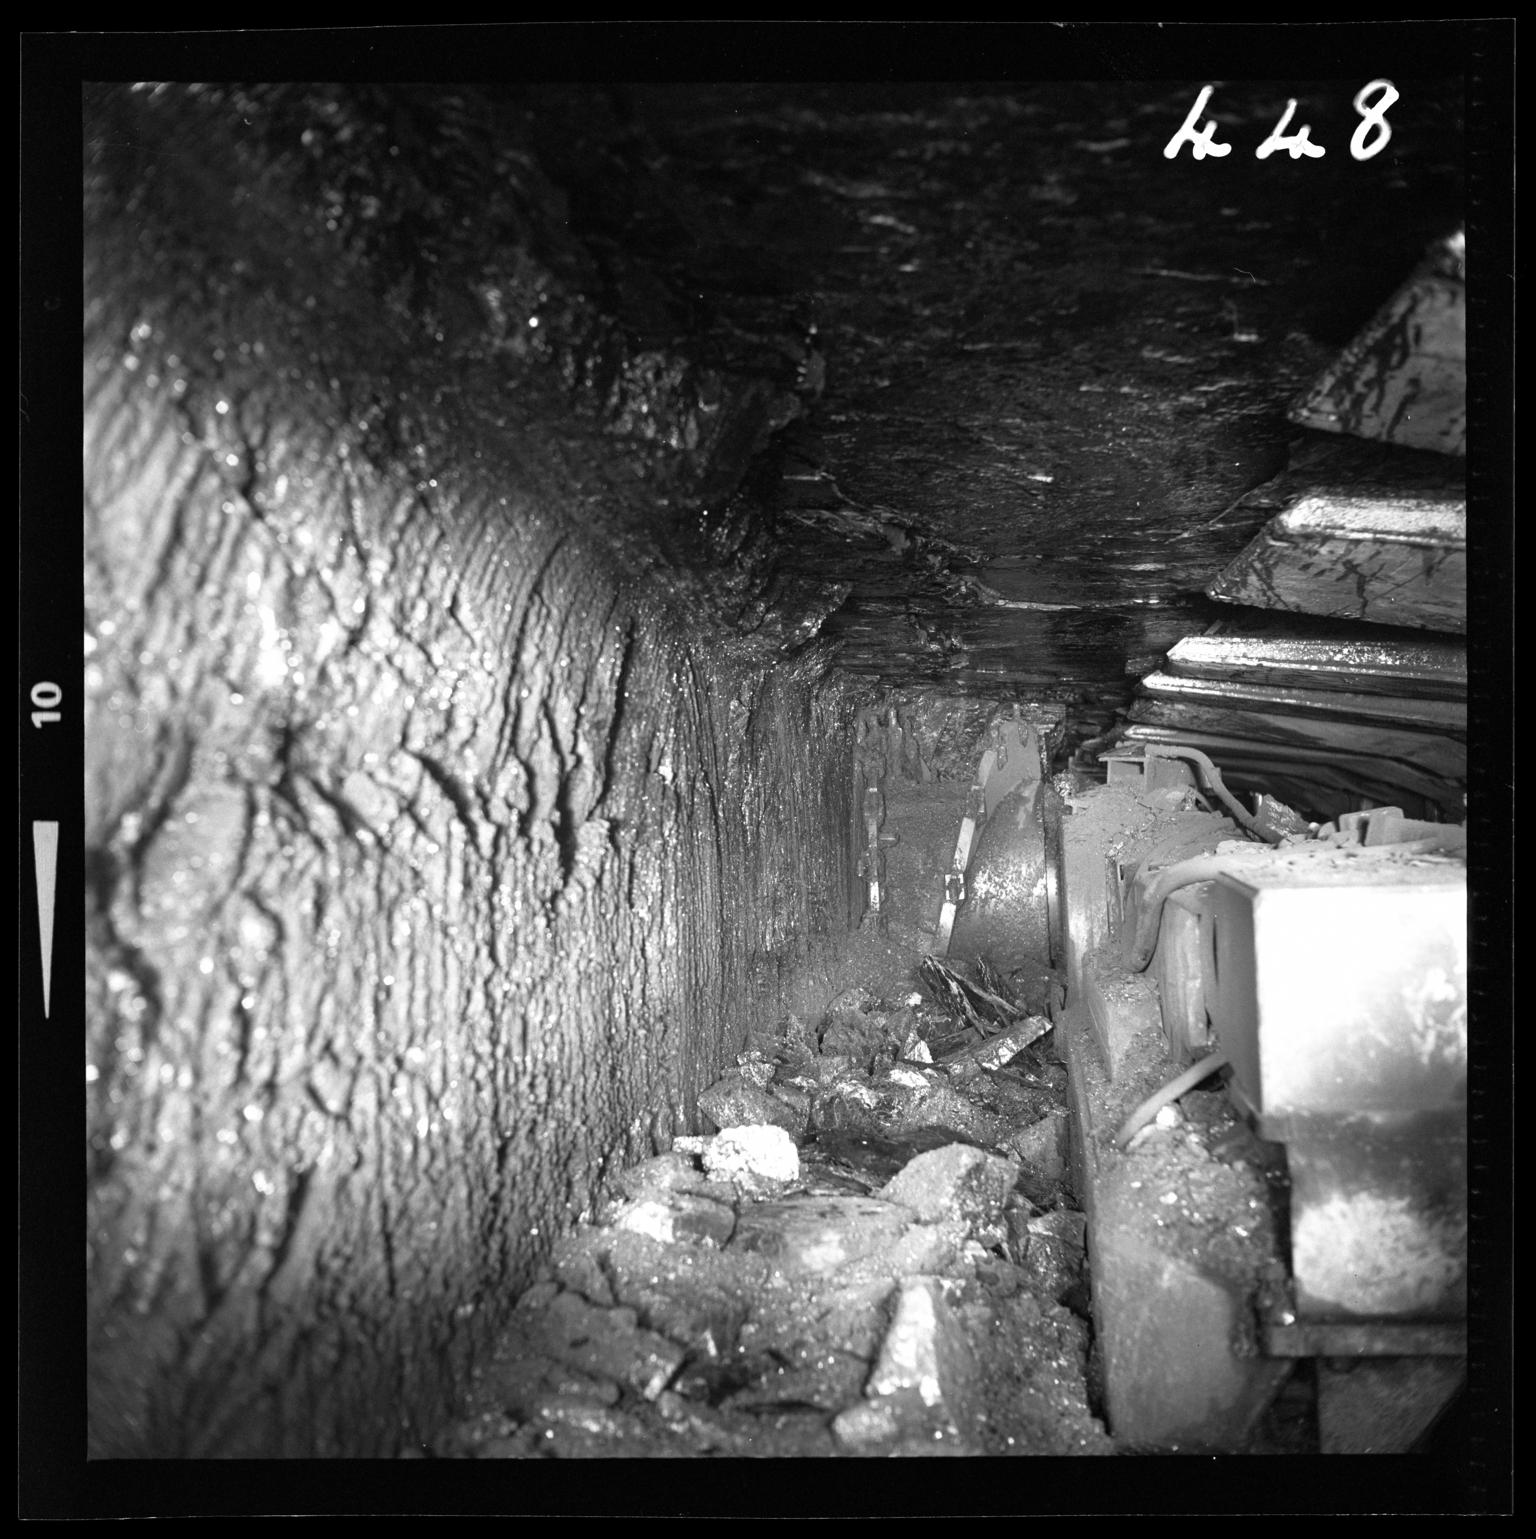 Garw Colliery, film negative